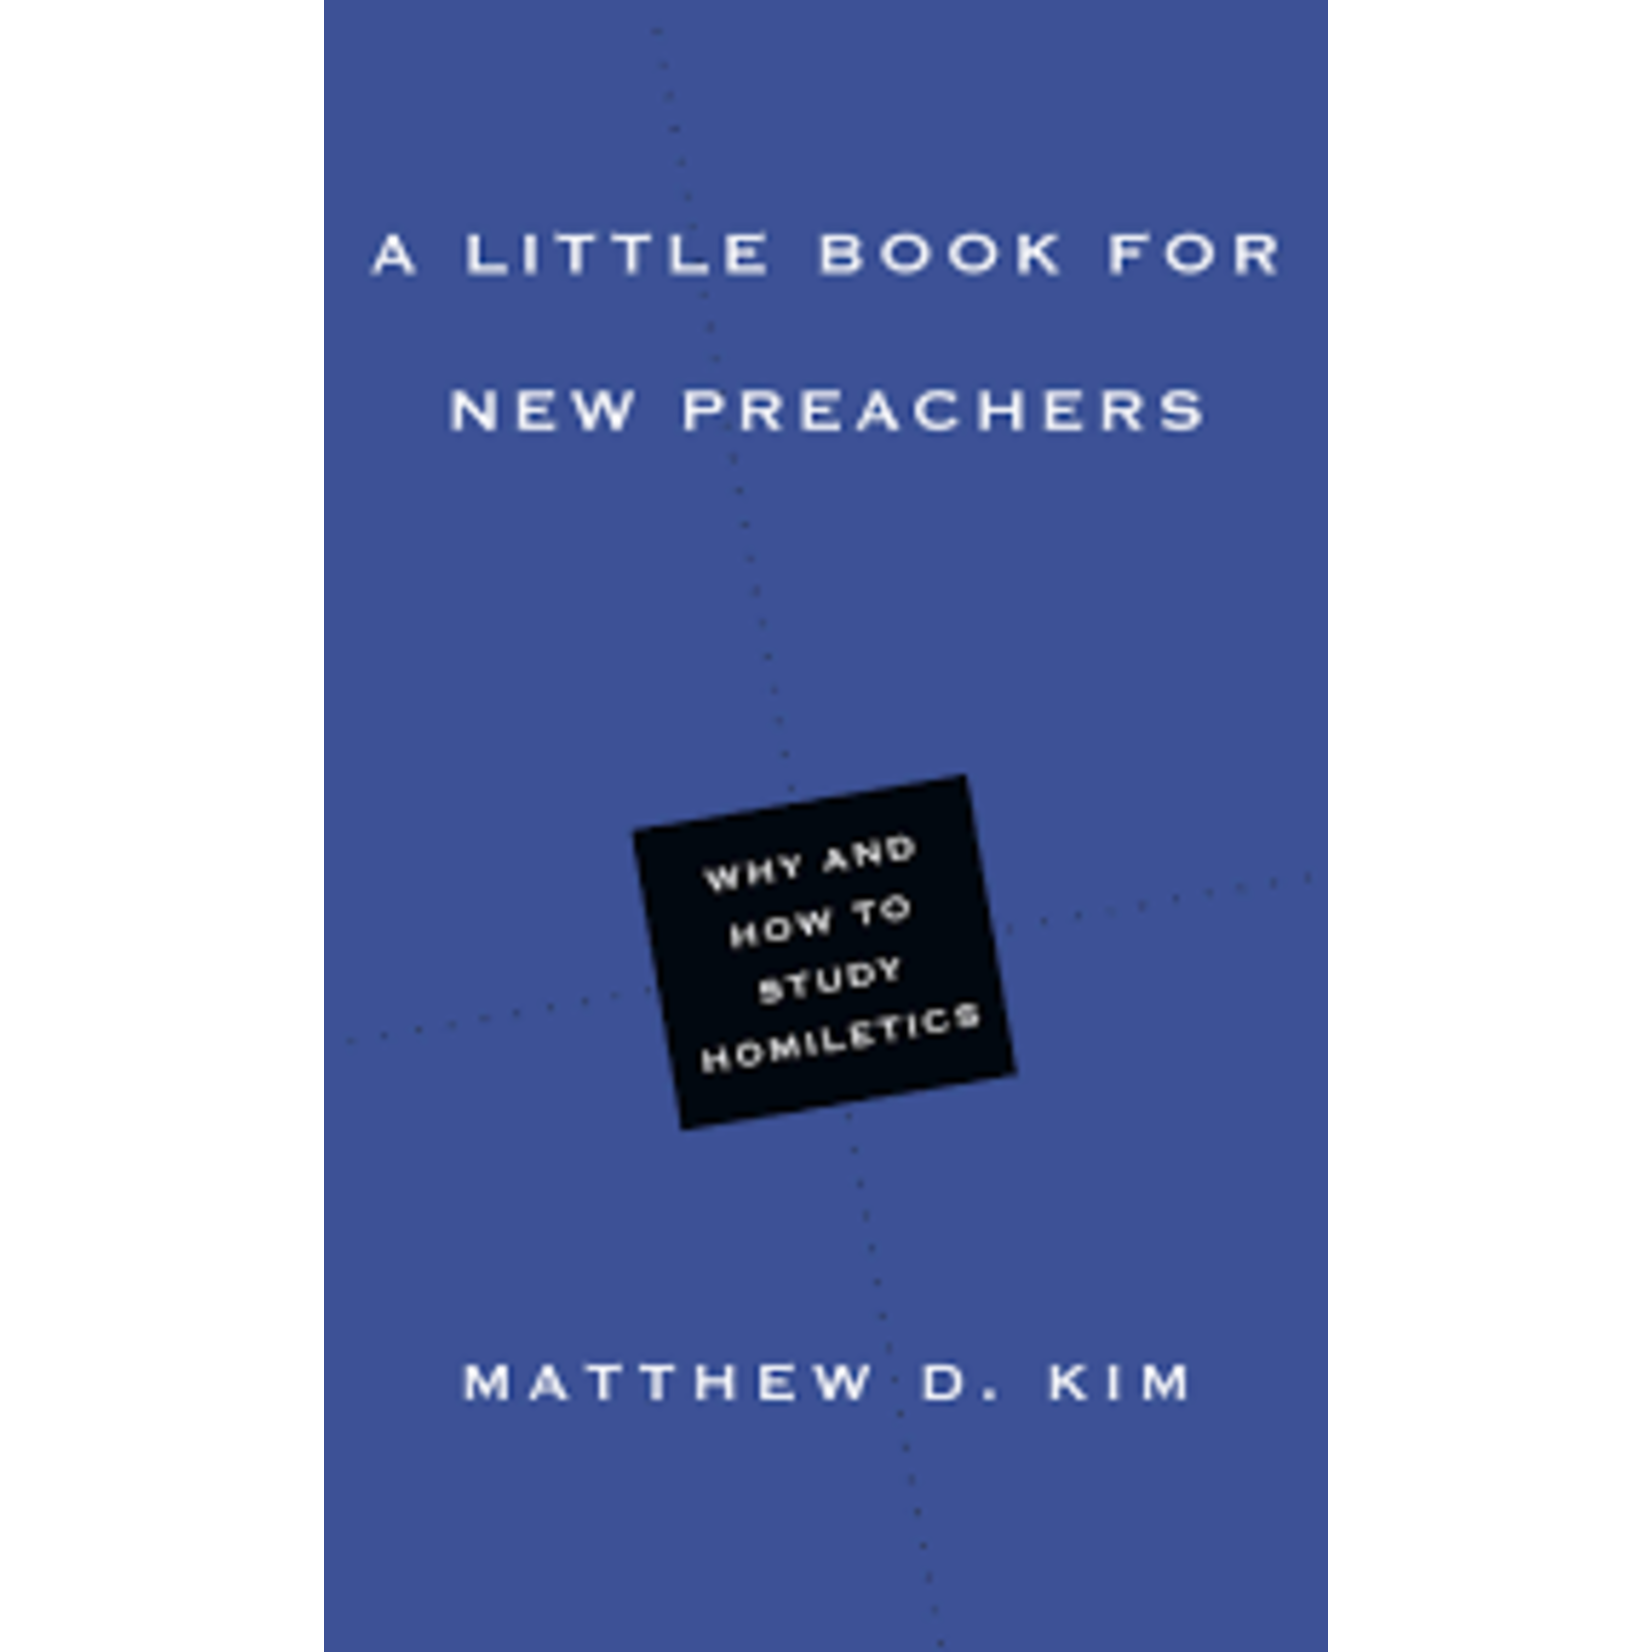 A Little Book for New Preachers